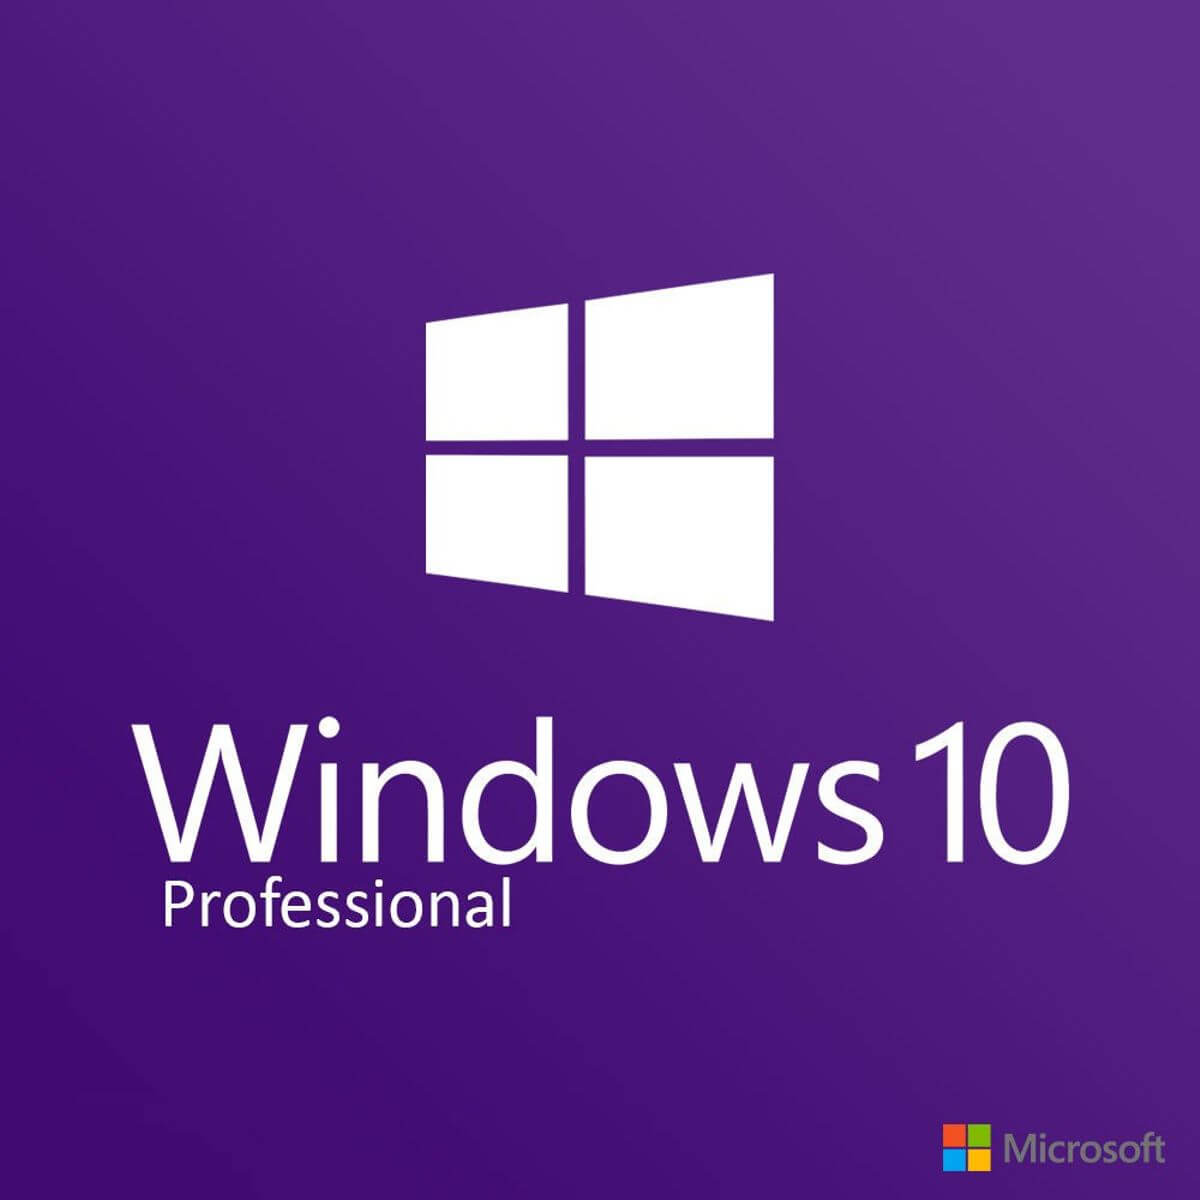 Windows 10 cover